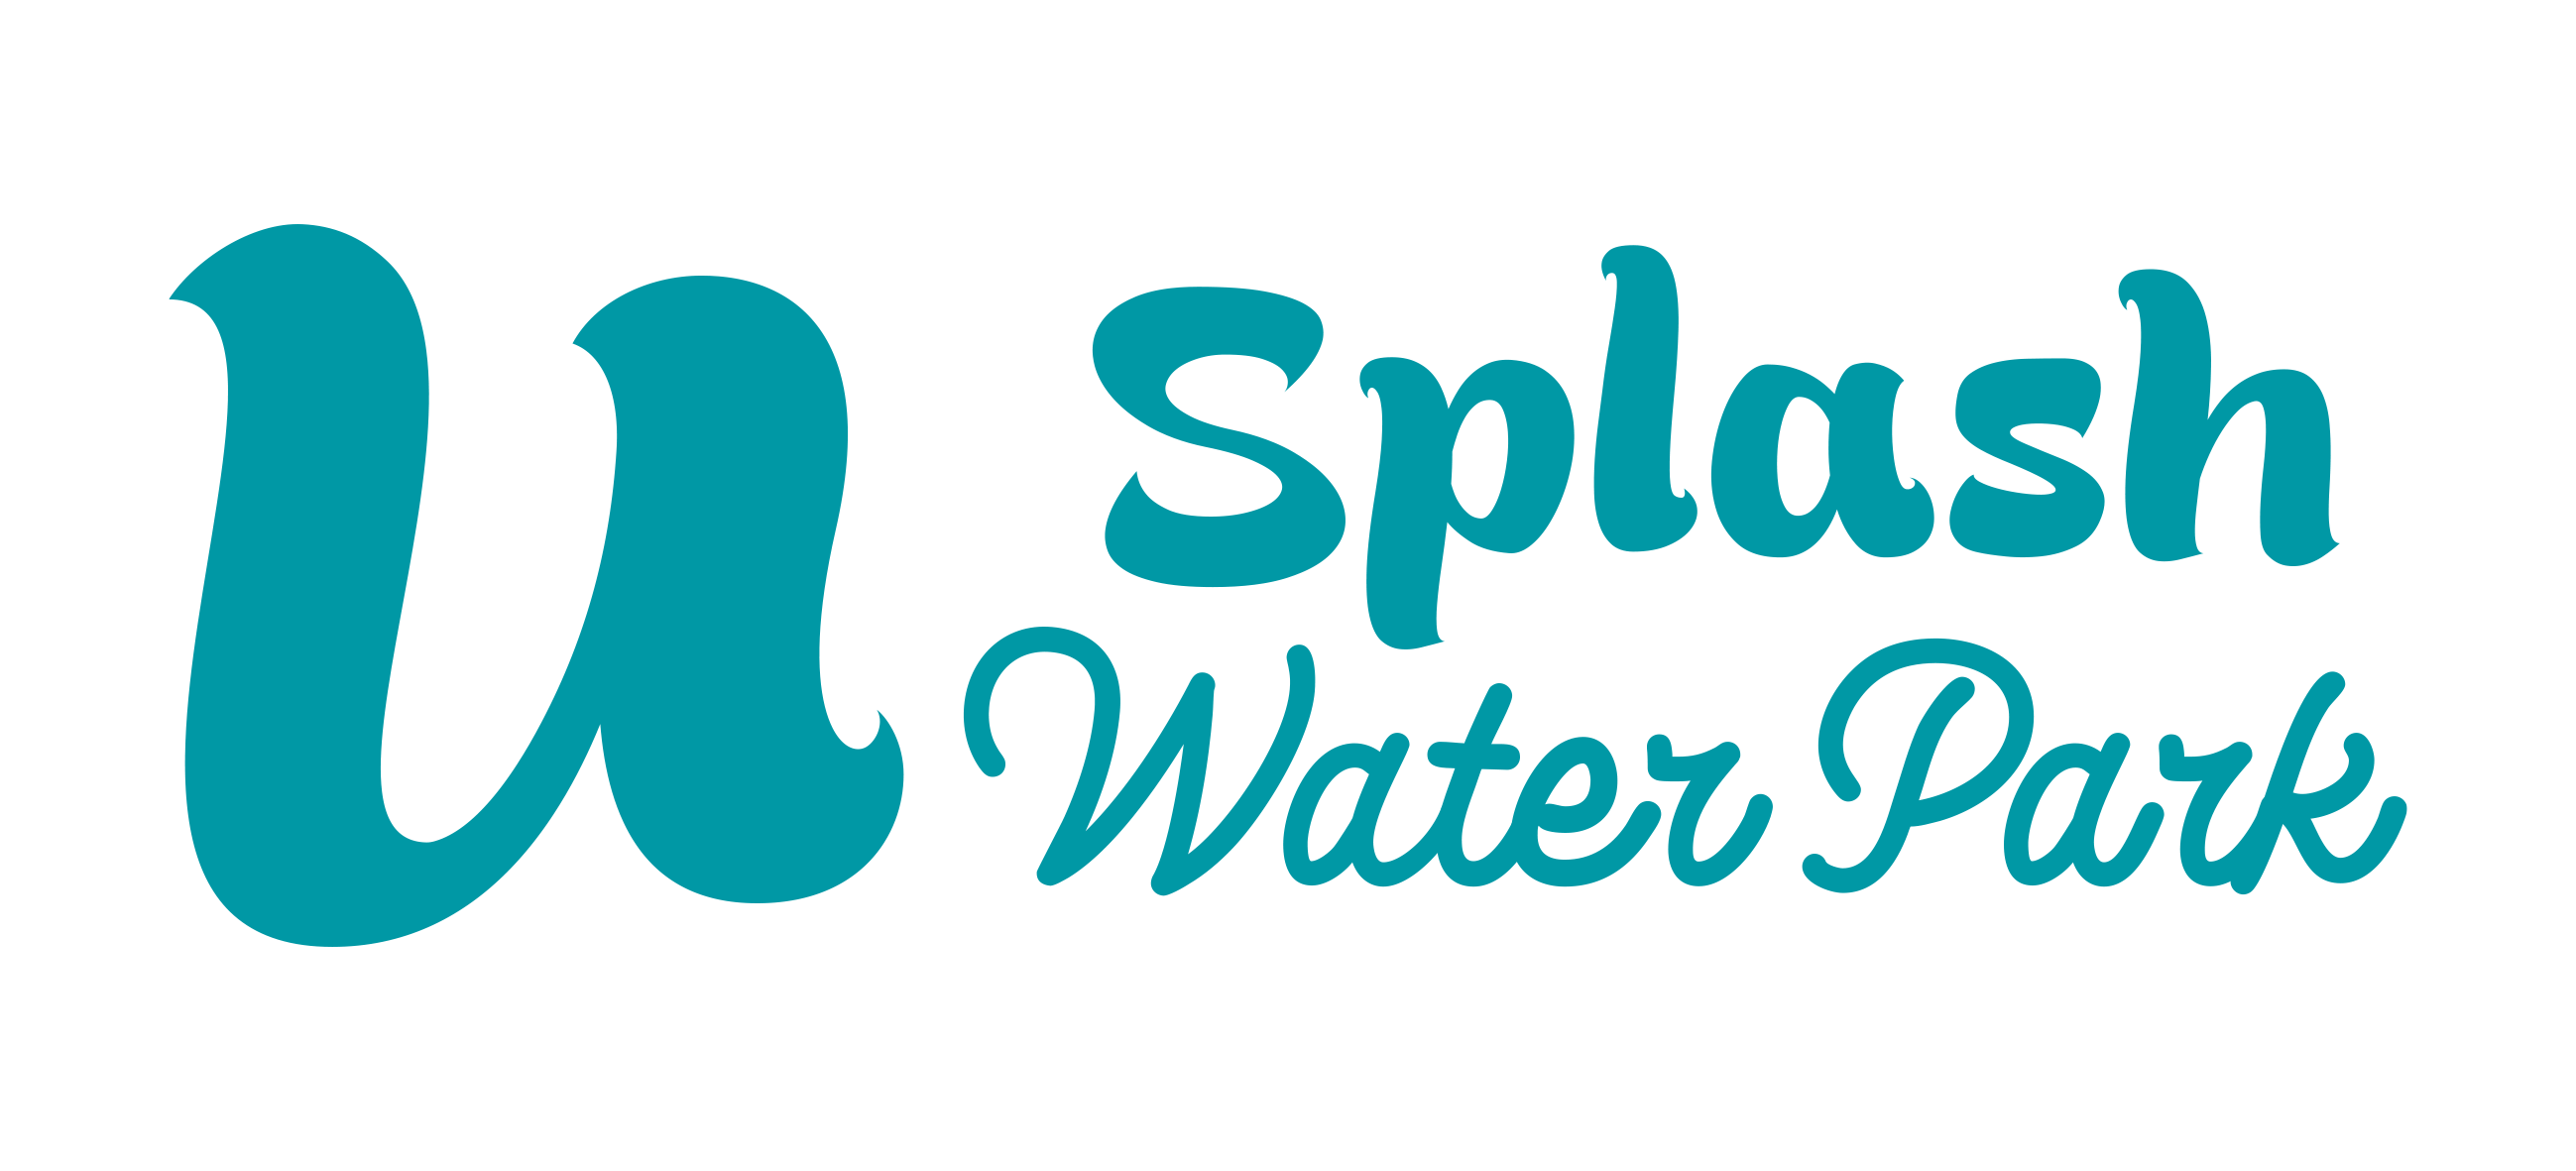 USplash-water-park-logo